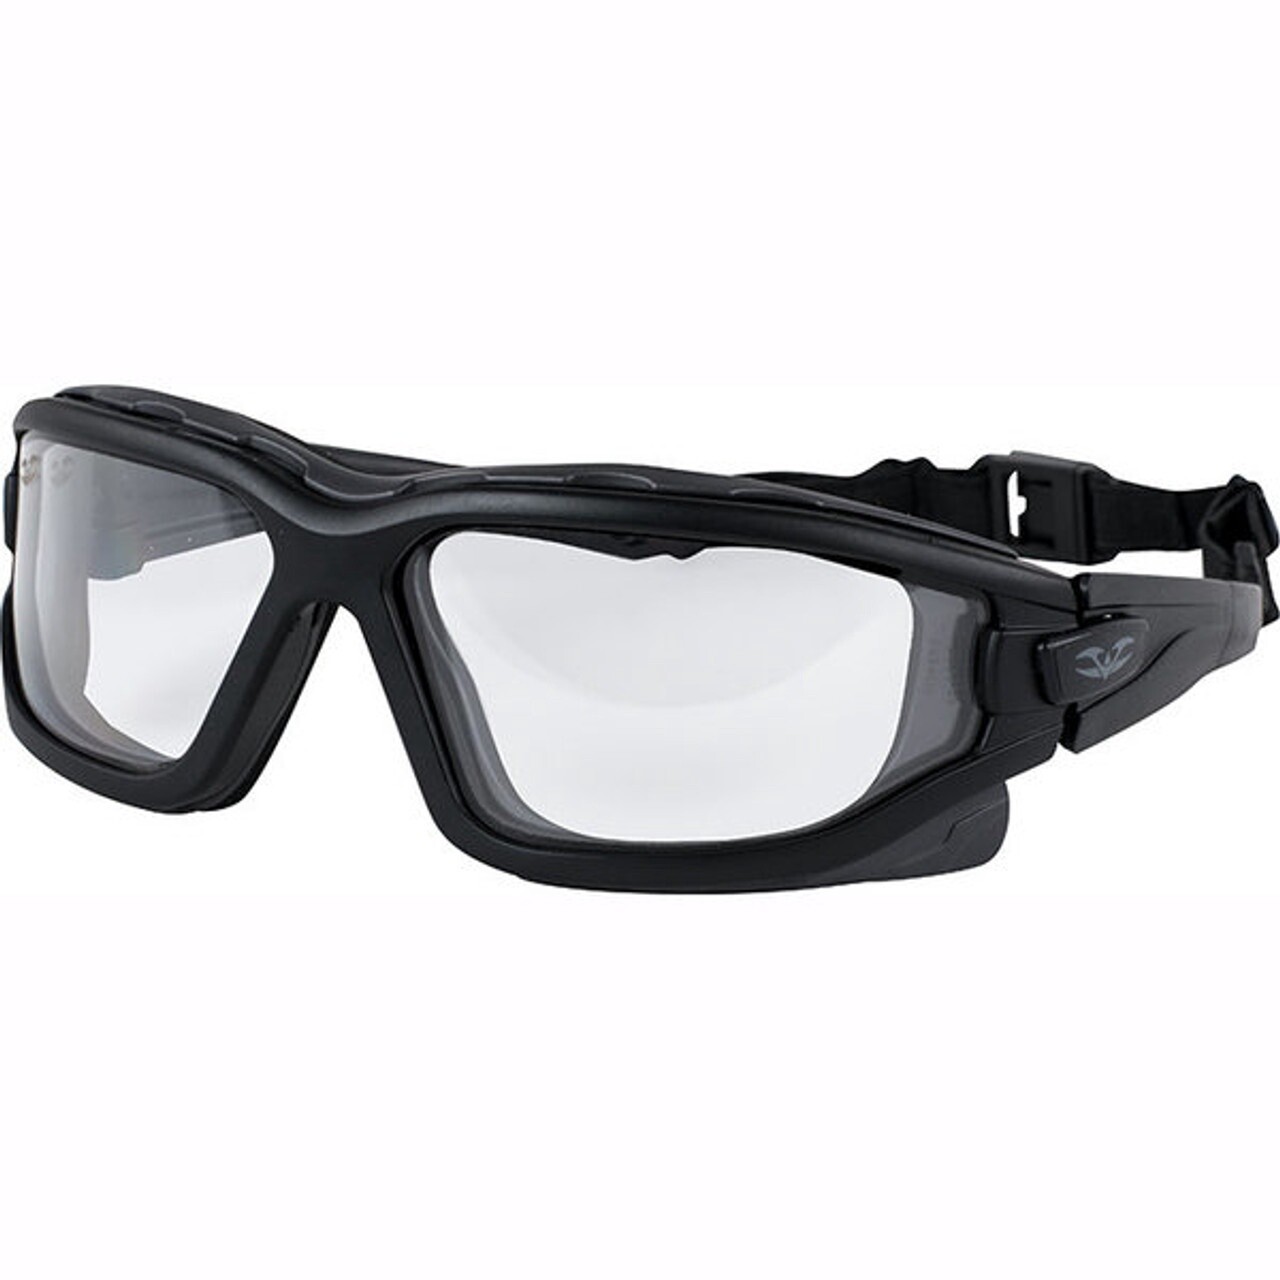 Valken Zulu Thermal Goggles - Regular Fit, Lens Color: Clear